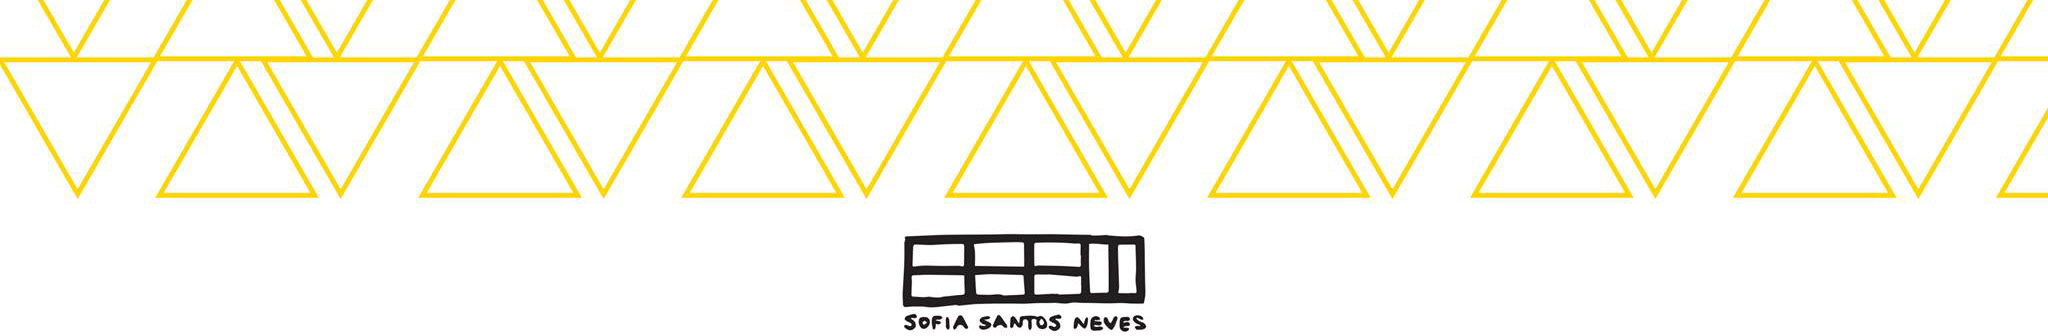 Sofia Santos Neves's profile banner